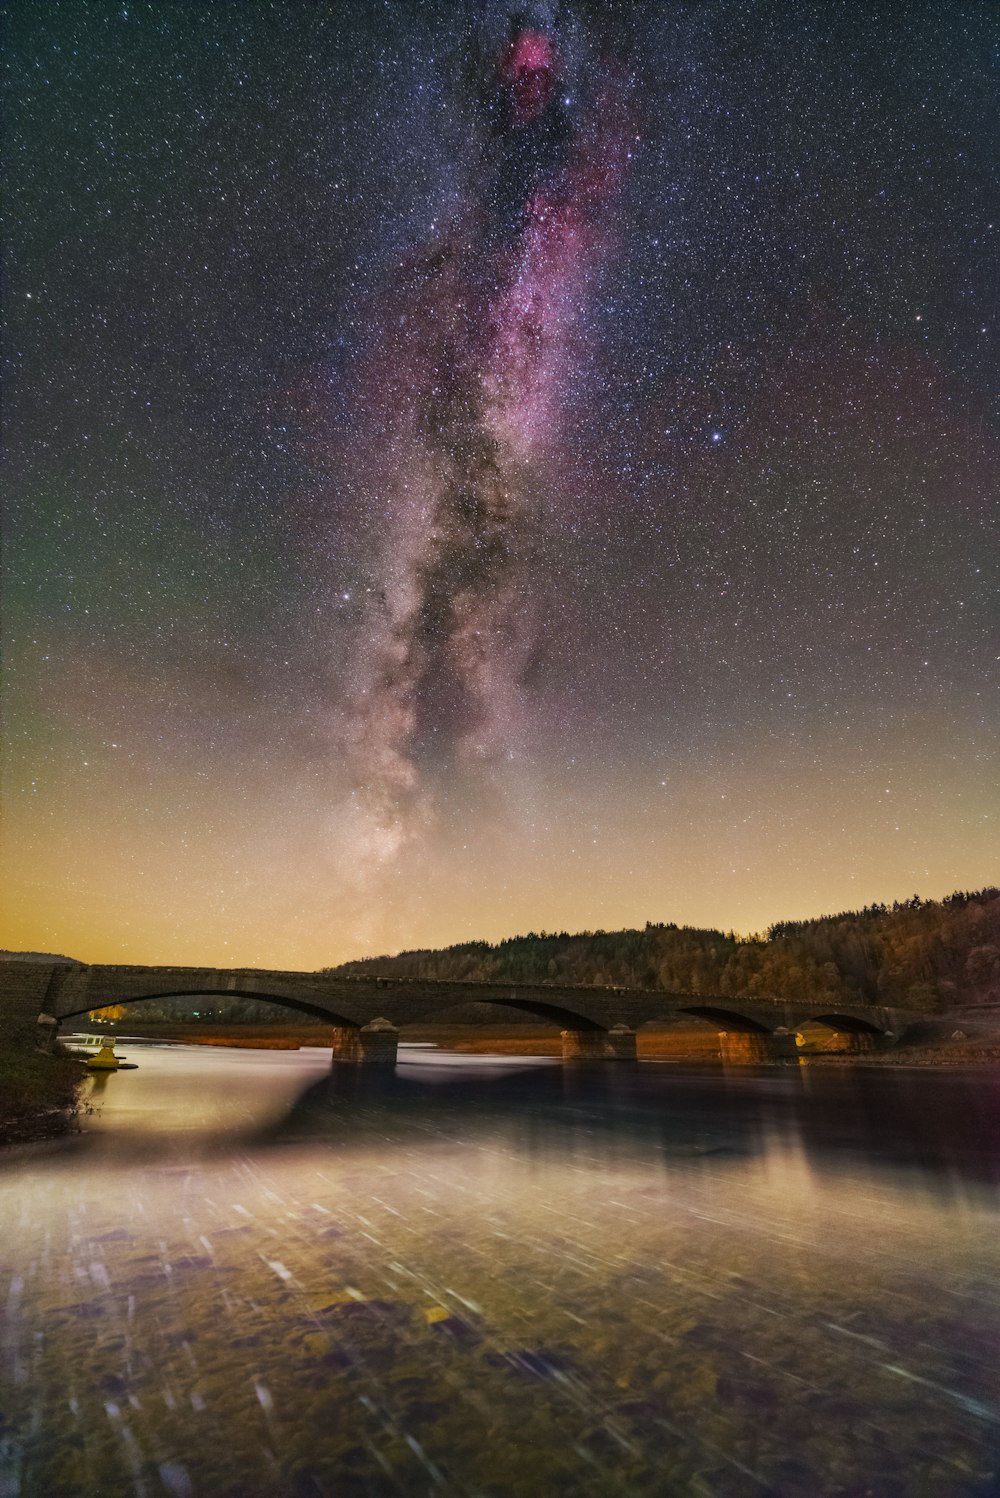 a bridge over a river under a night sky